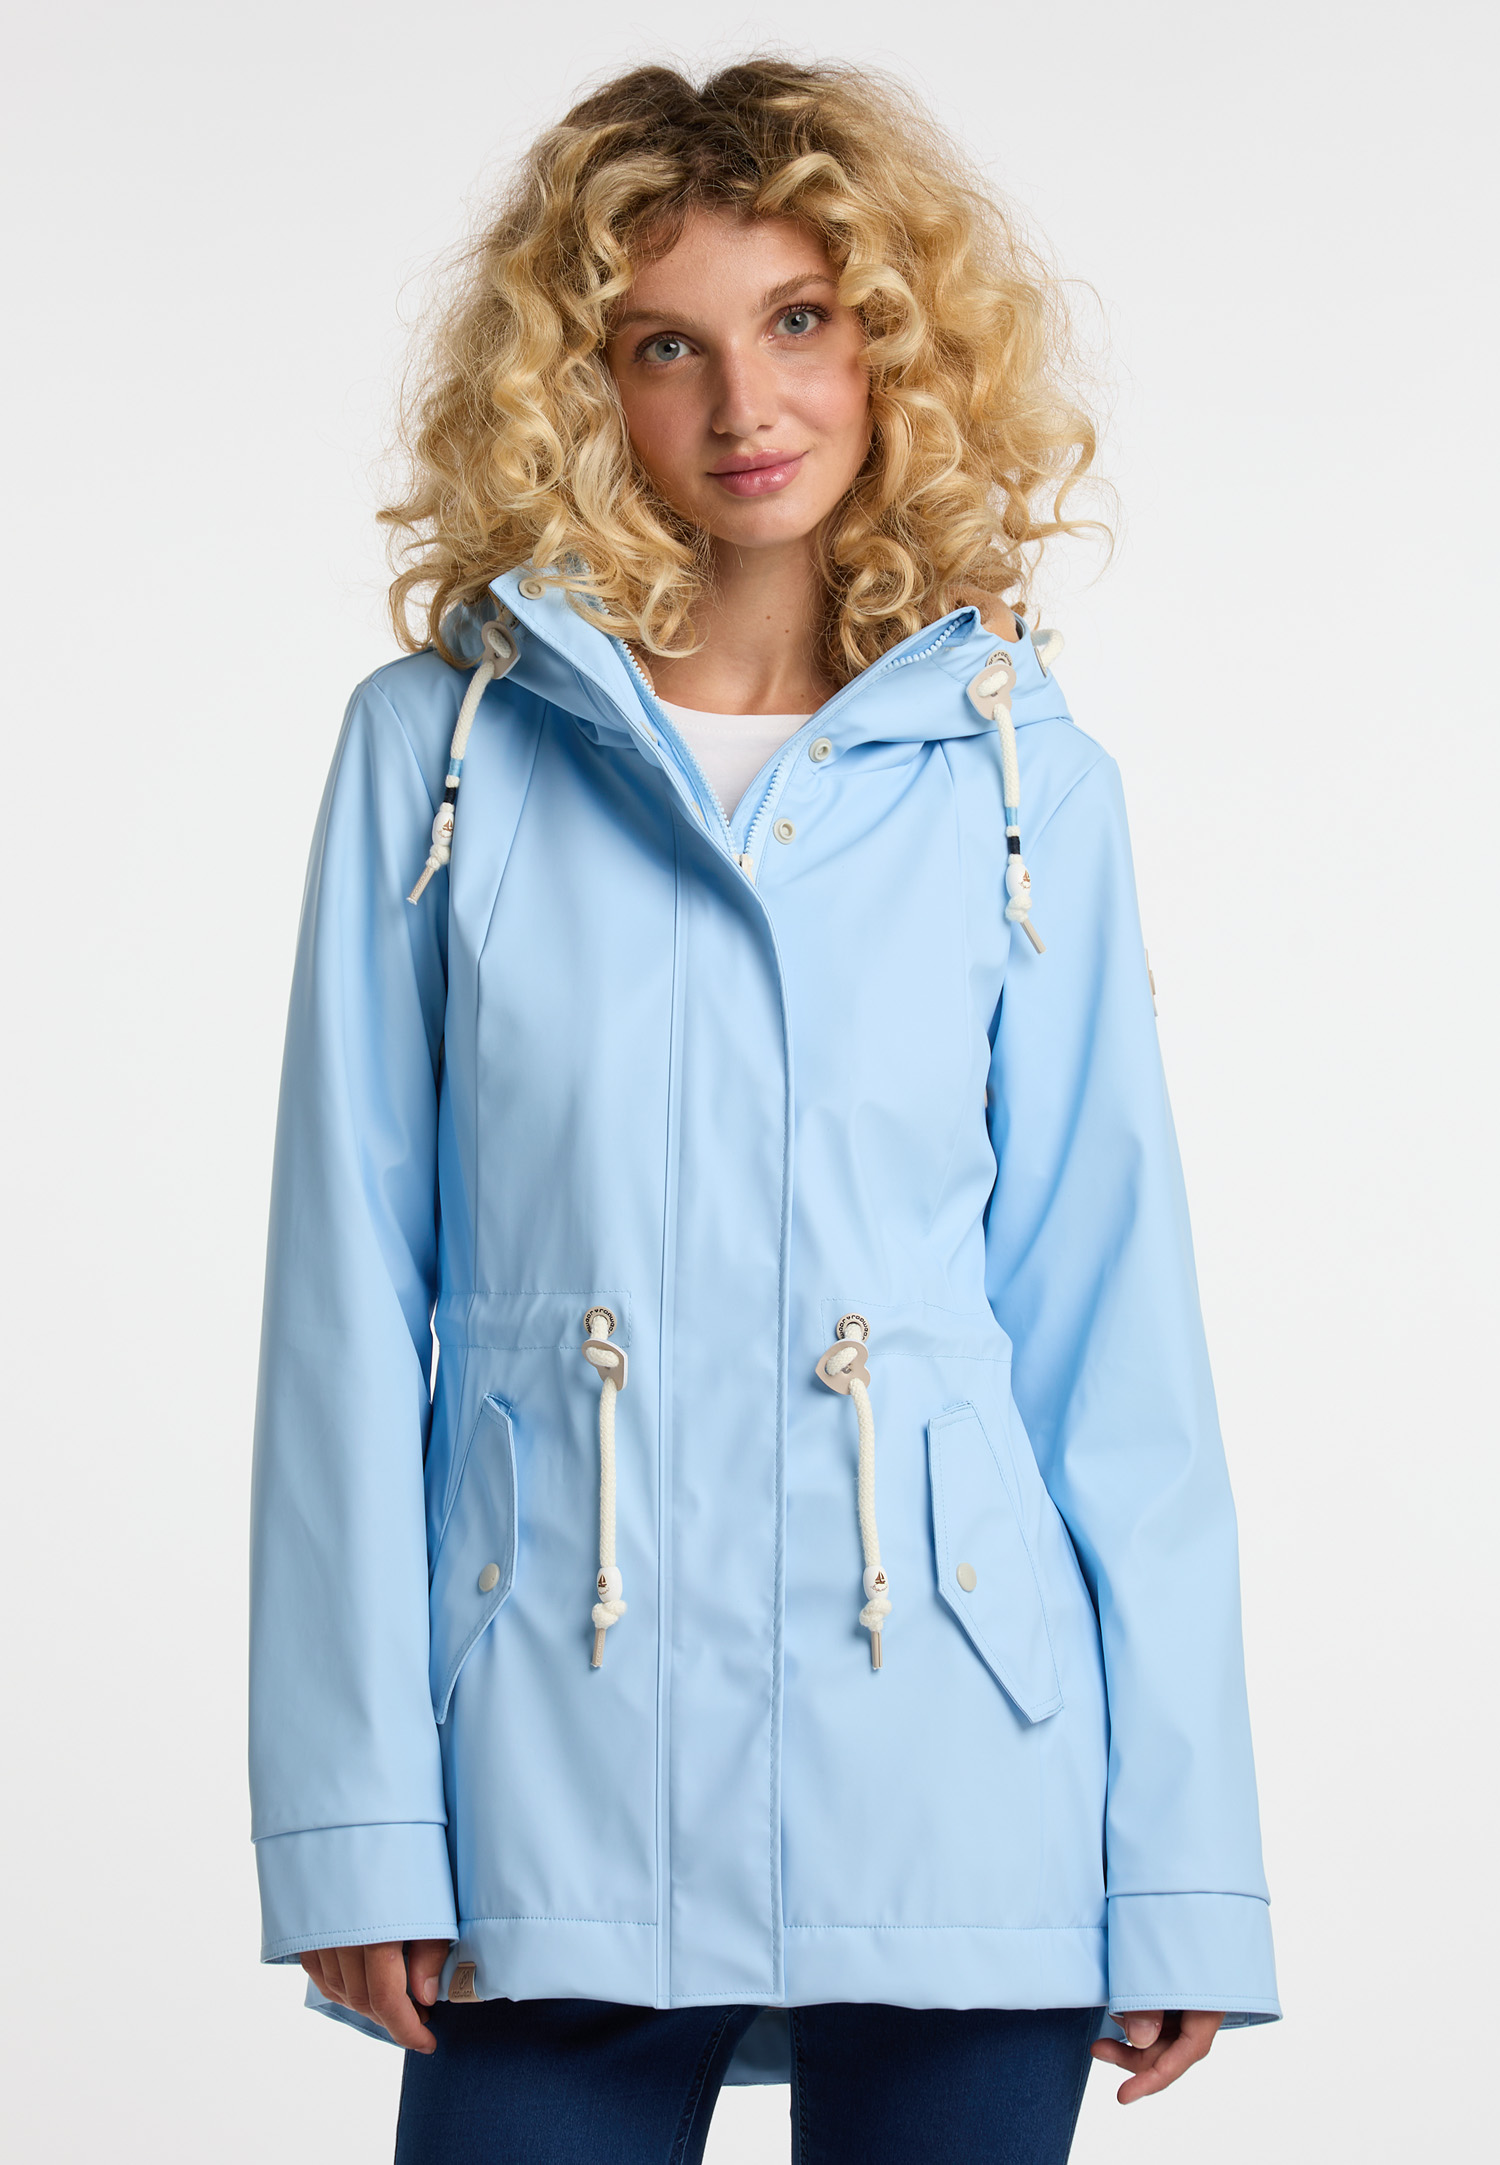 Top Stylish to Magazine jackets this rain | ragwear season! wear 